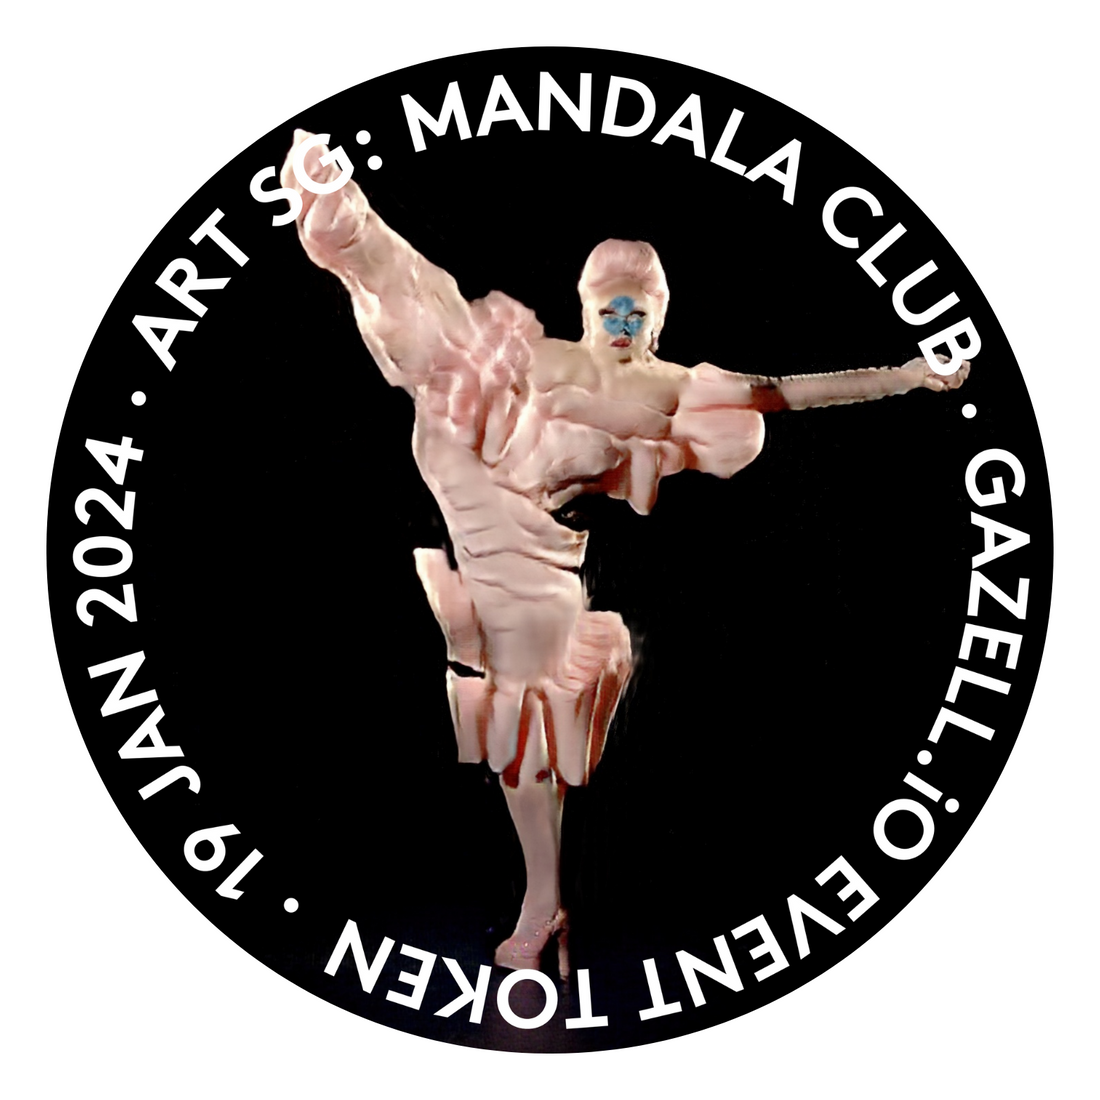 VIP Event at Mandala Club